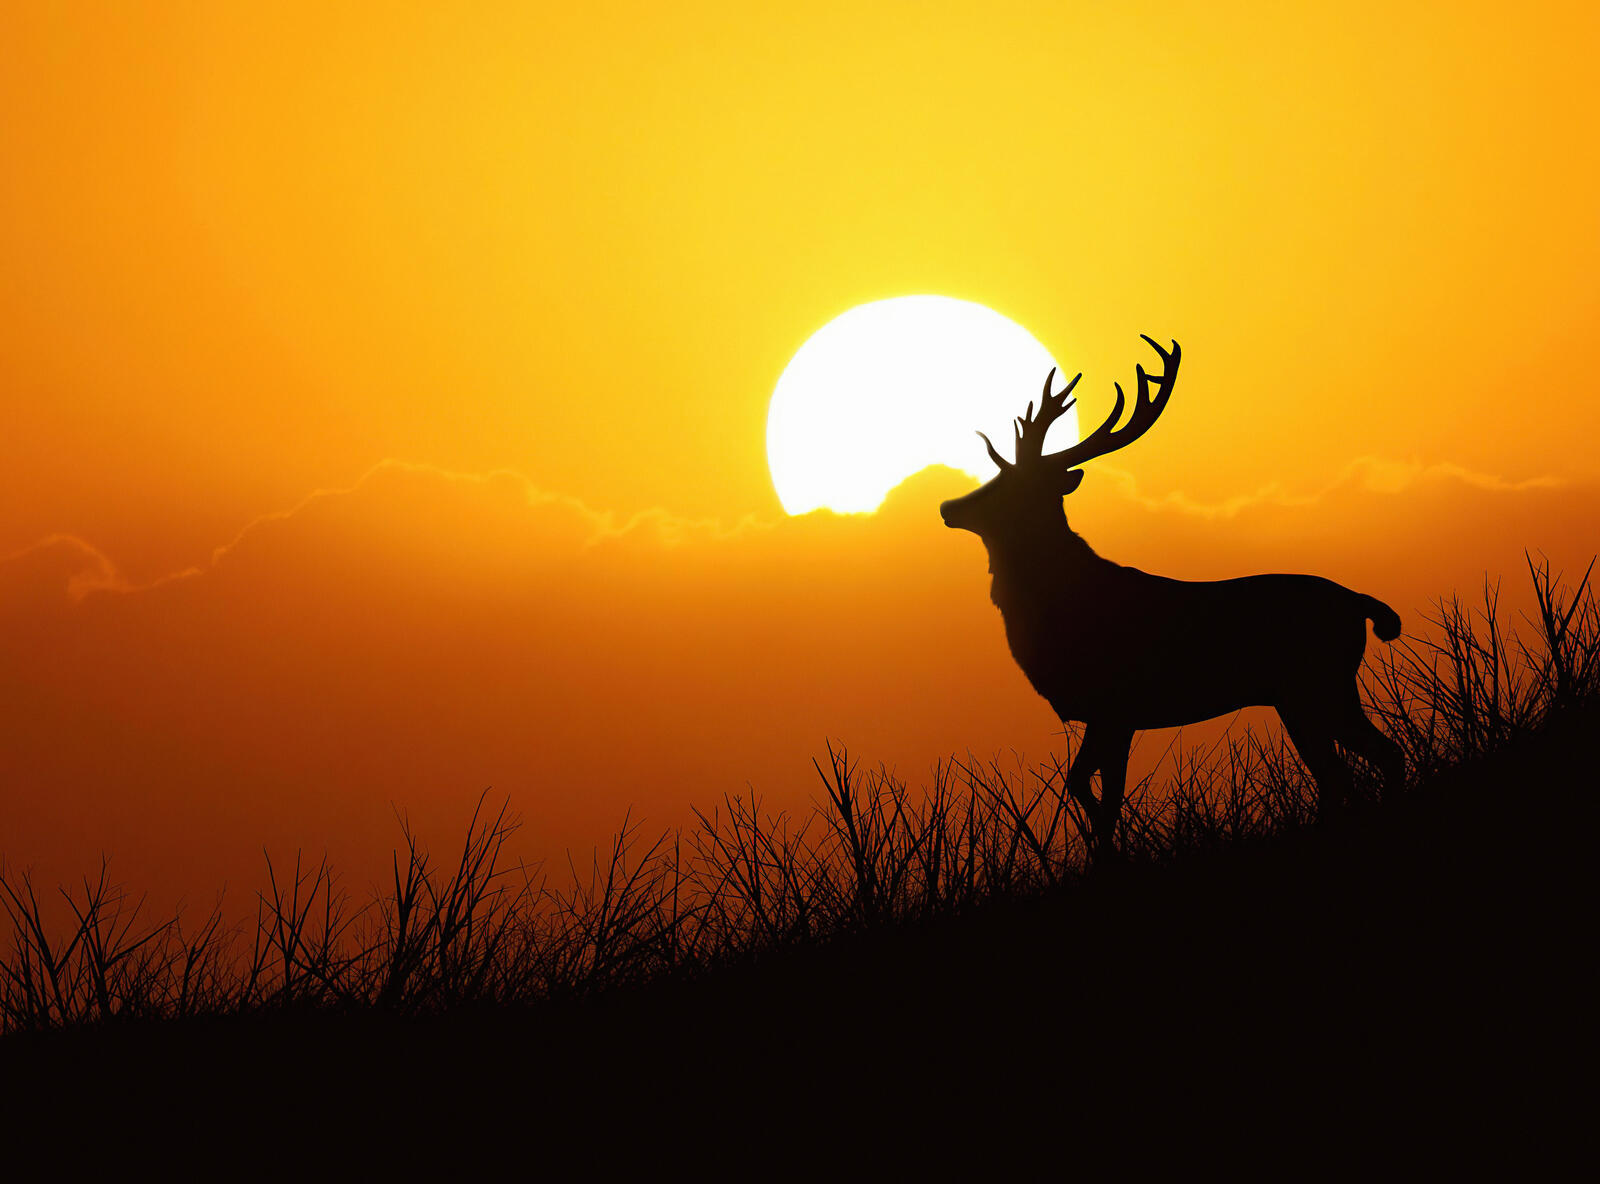 Wallpapers deer animals silhouette on the desktop